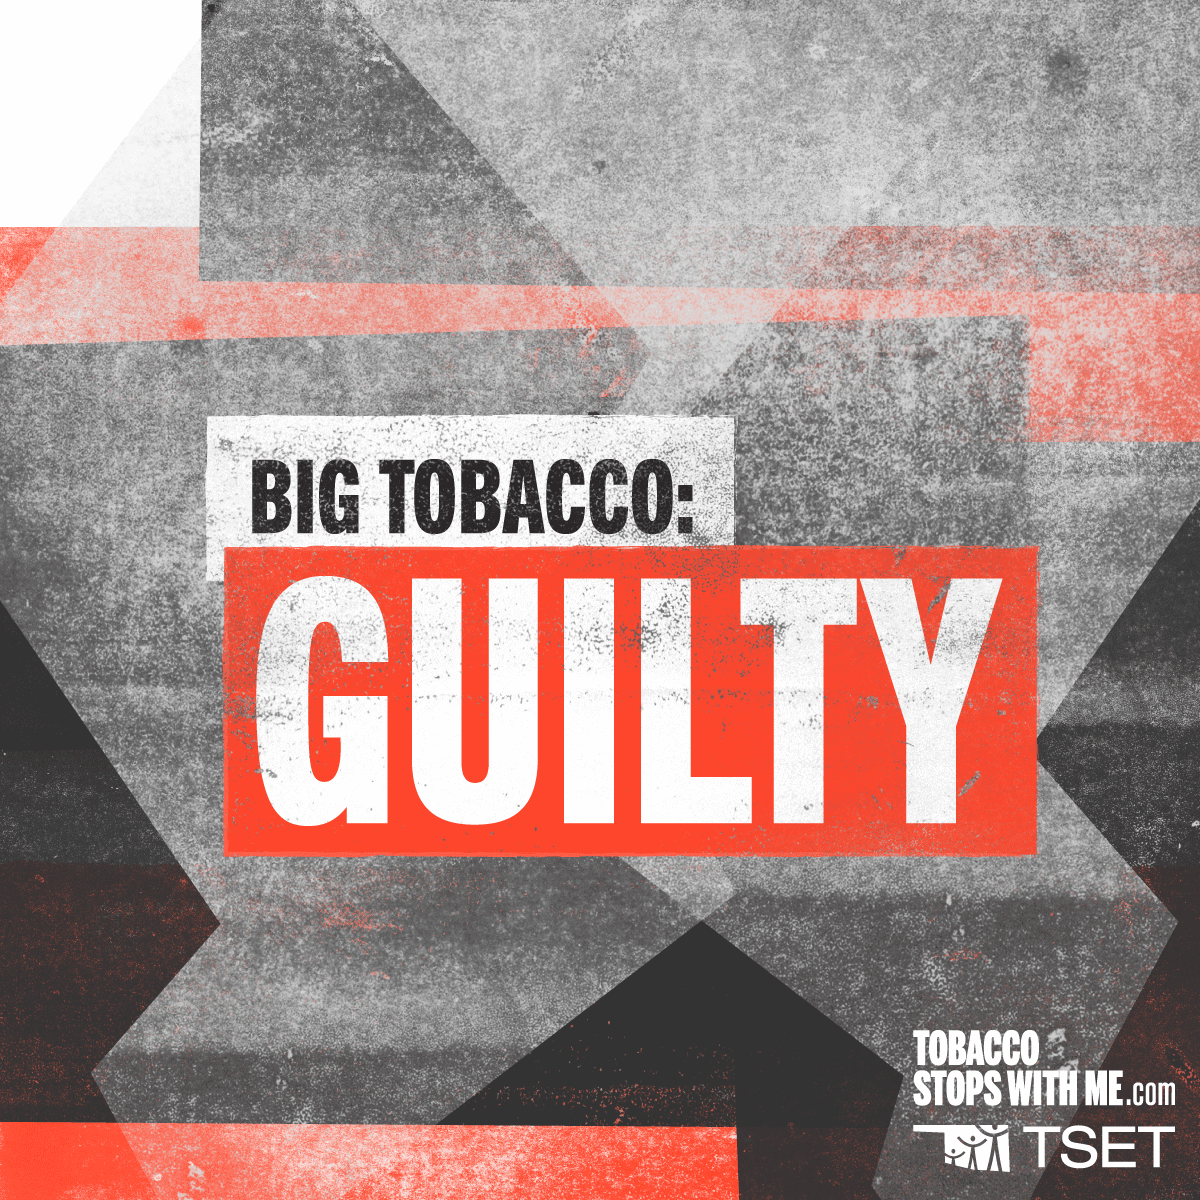 Big tobacco guilty